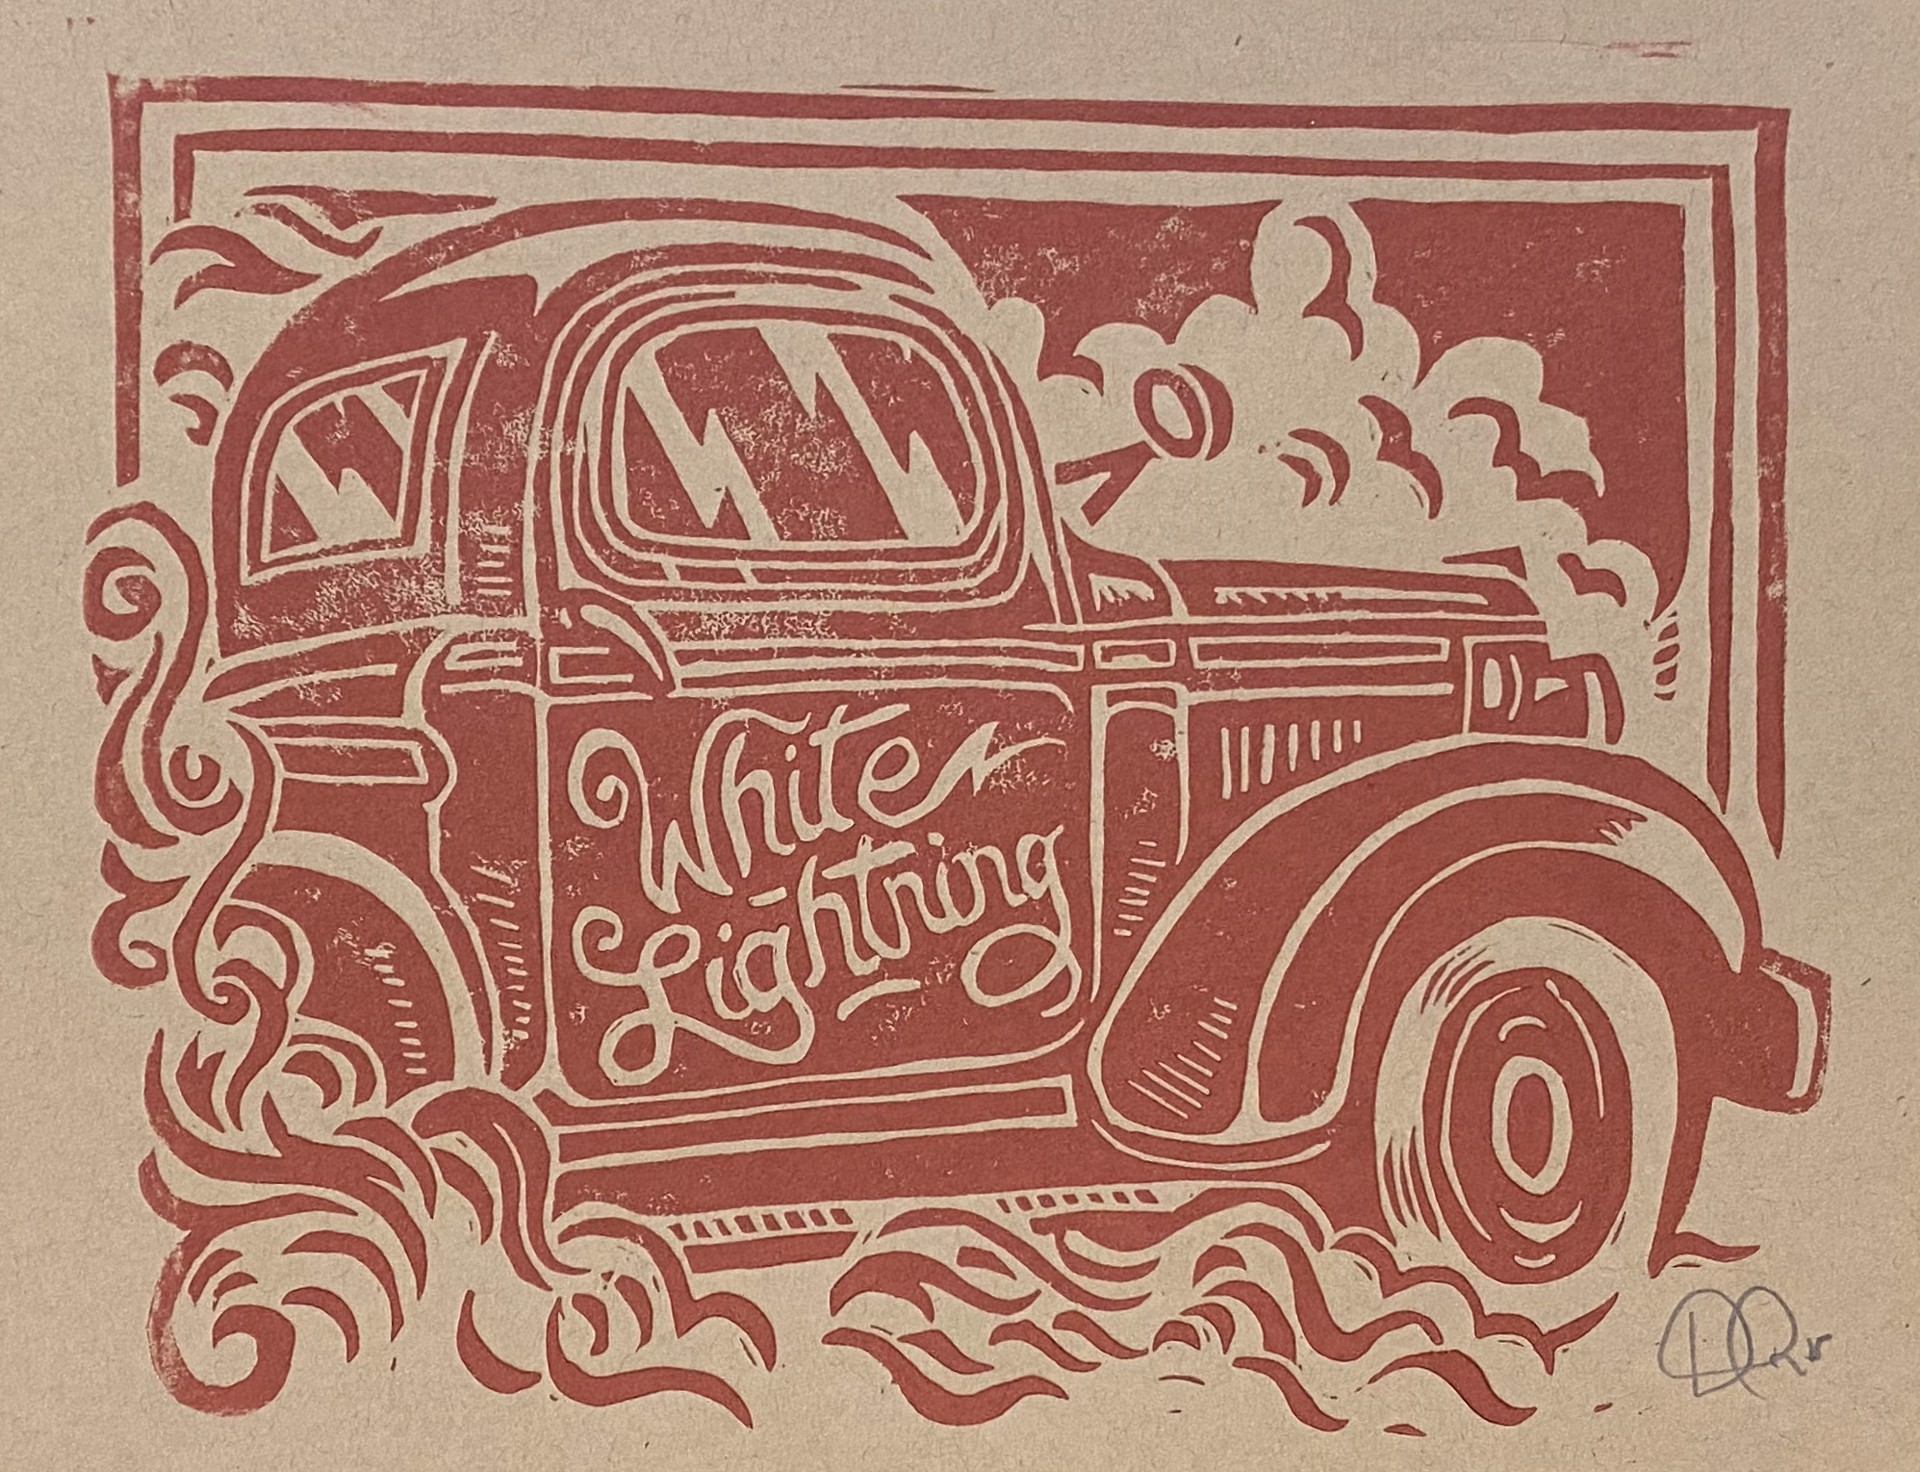 White Lightning (Craft) by Derrick Castle